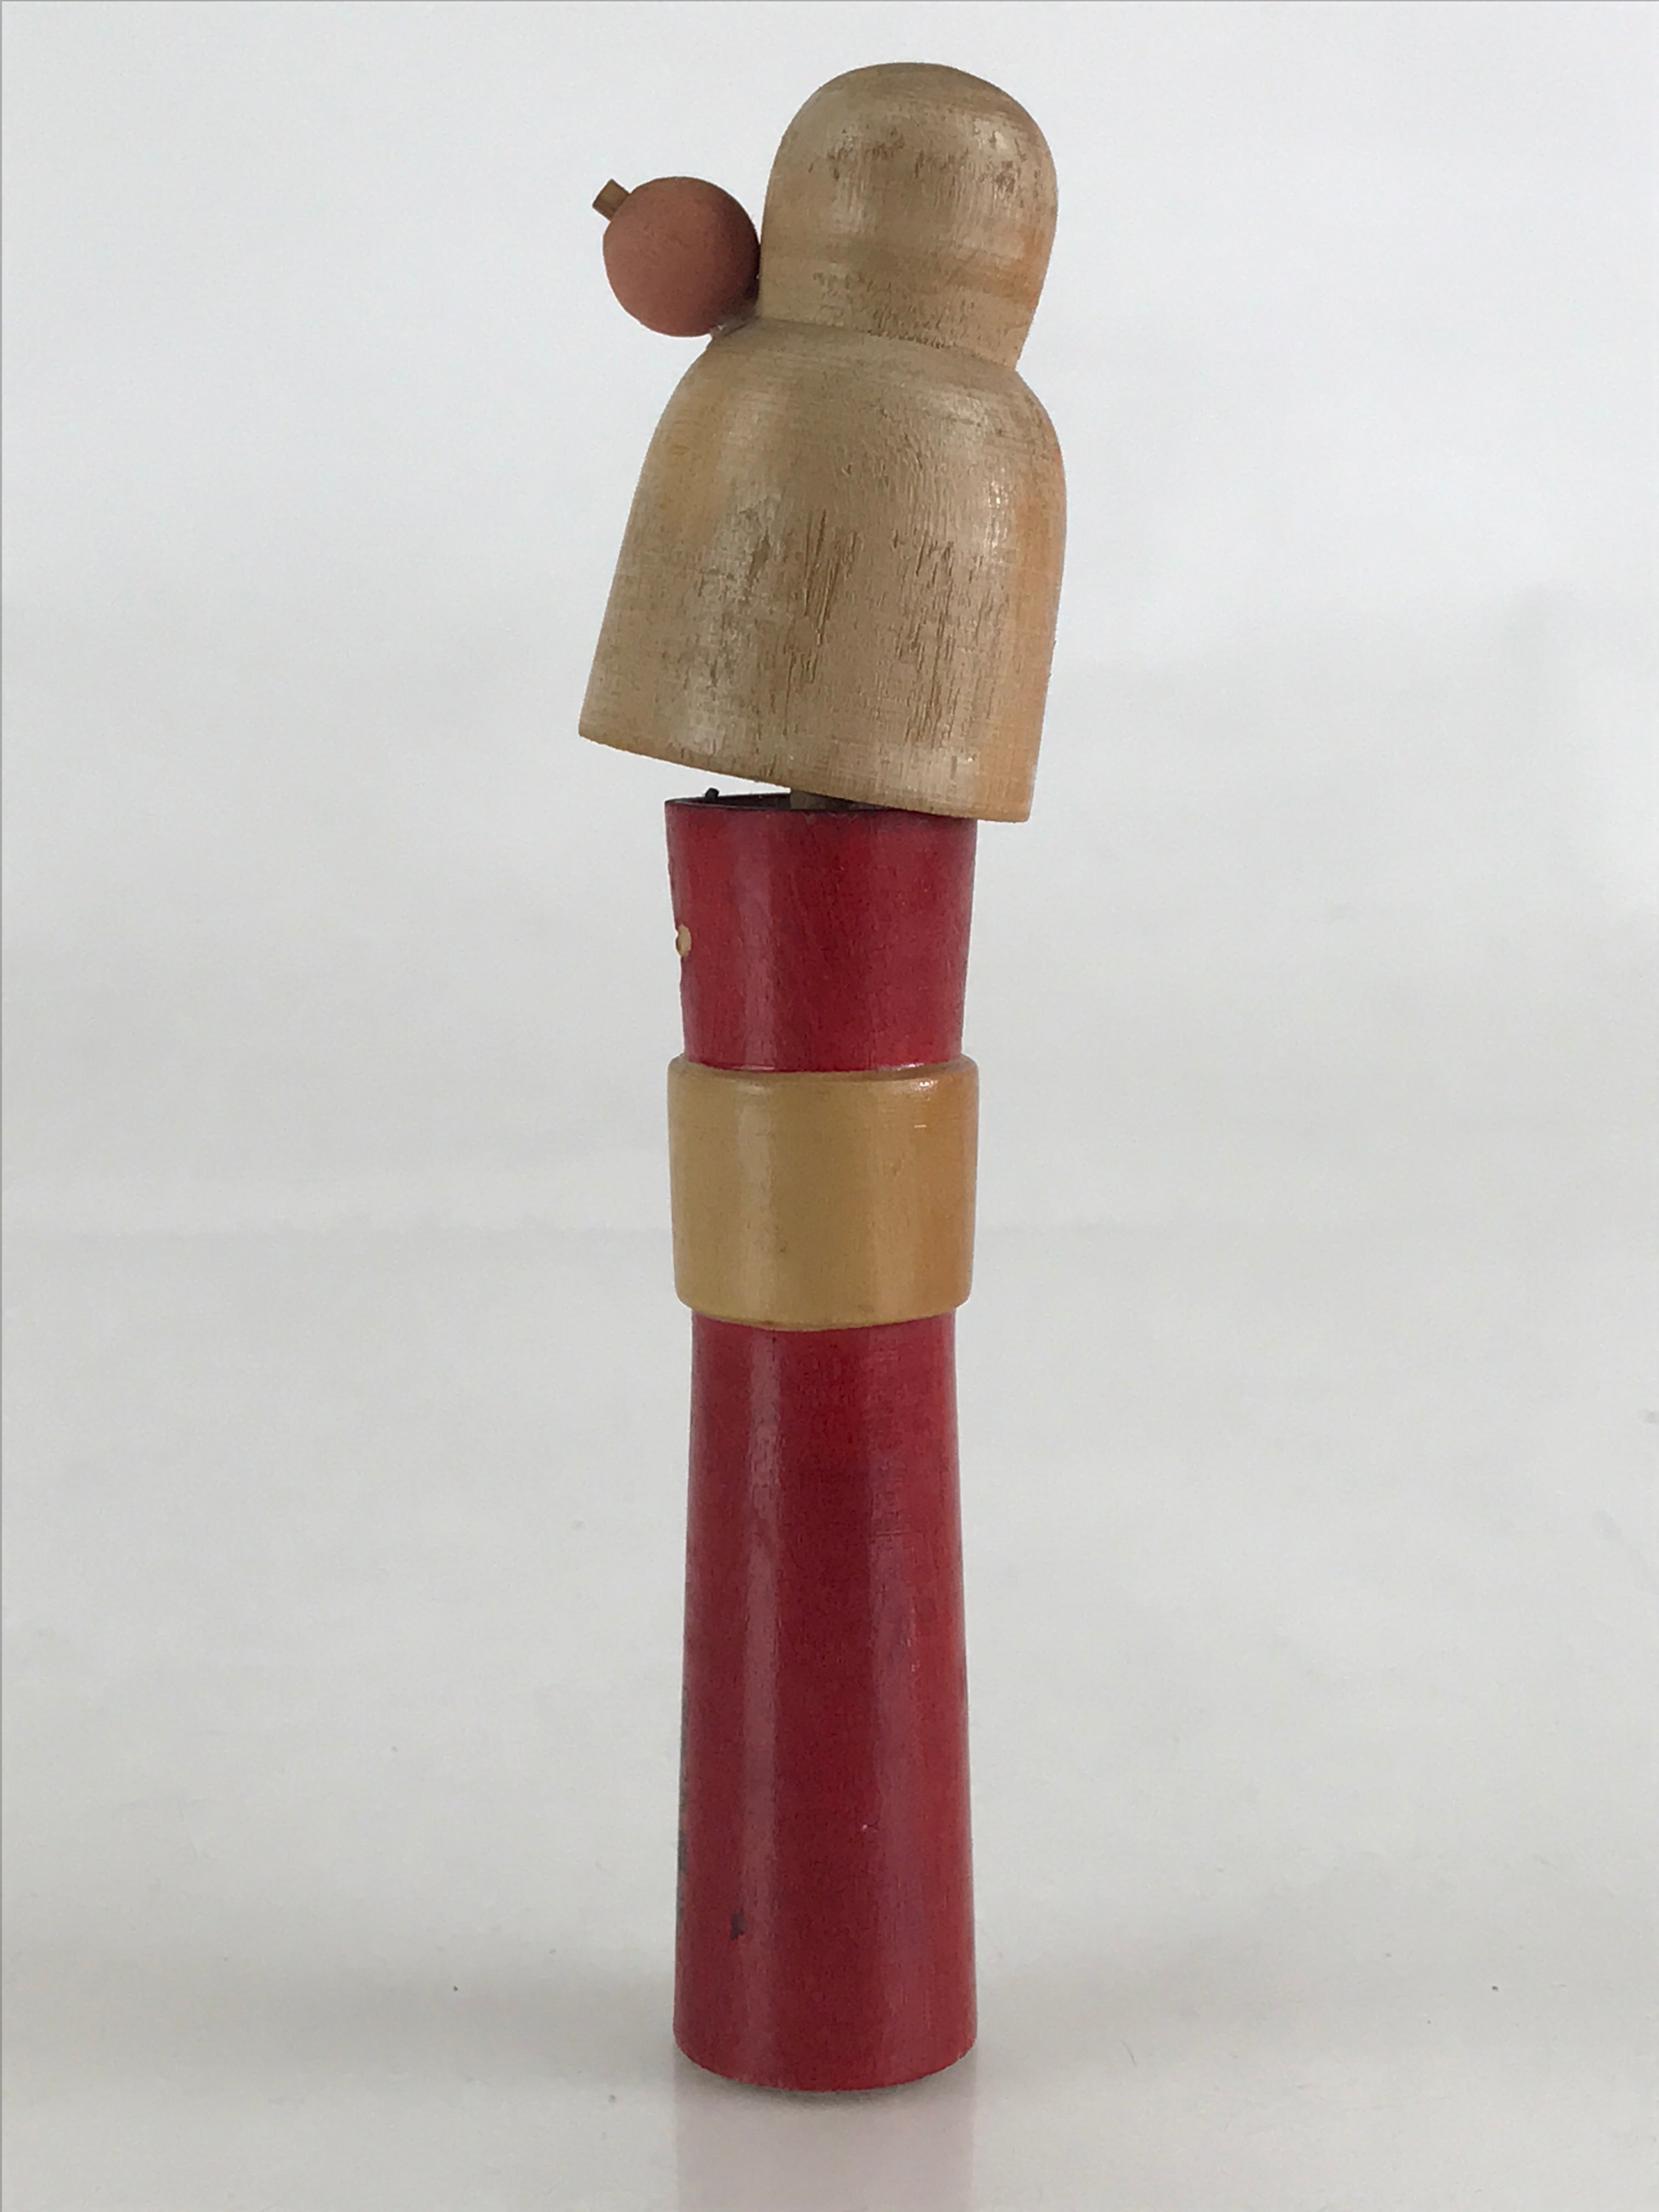 Japanese Wooden Kokeshi Doll Vtg Geisha Figurine Traditional Craft Folk Art Toy